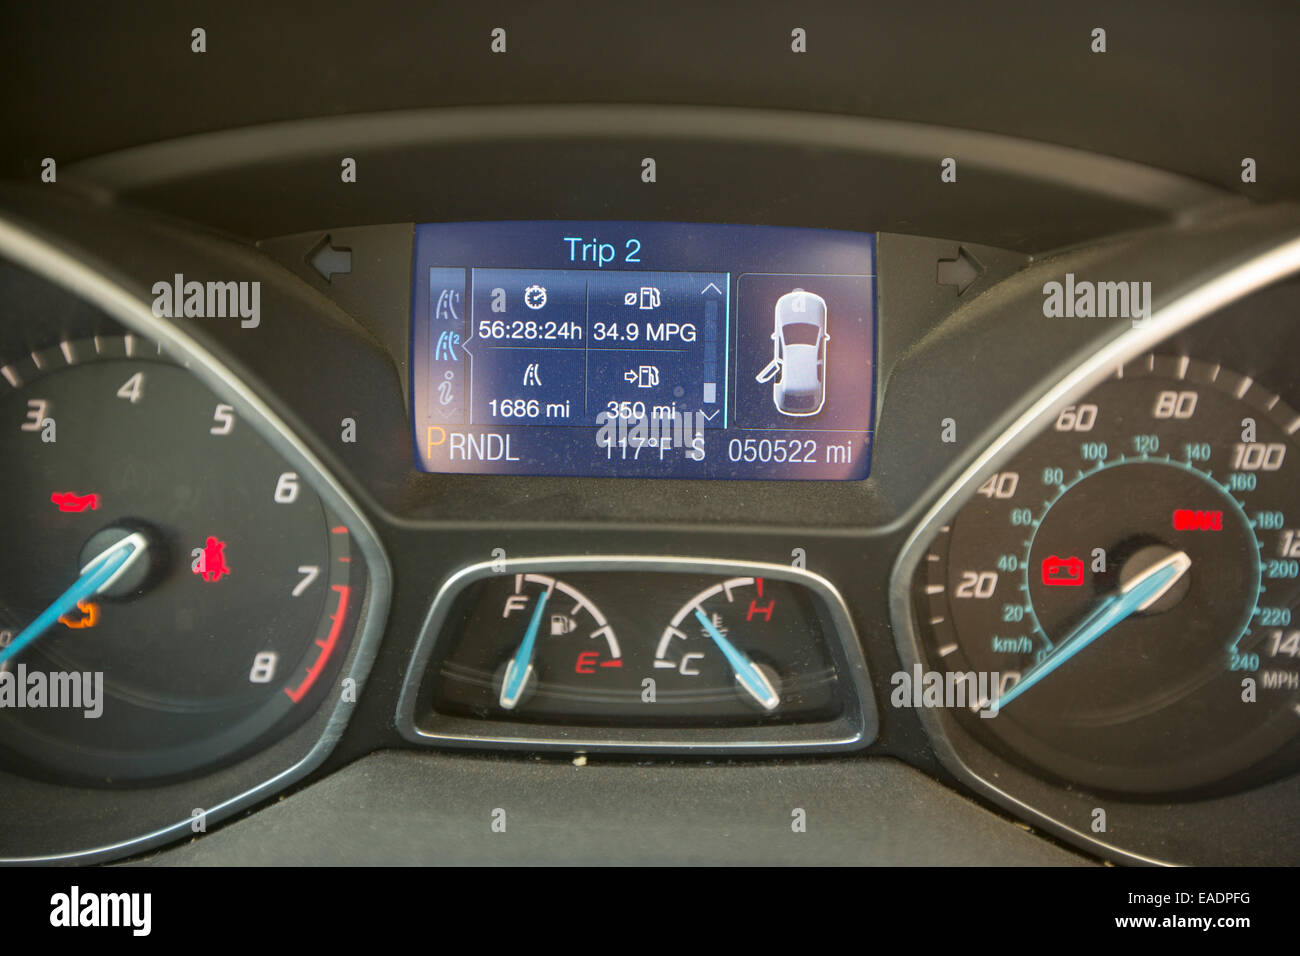 Auto thermometer -Fotos und -Bildmaterial in hoher Auflösung – Alamy